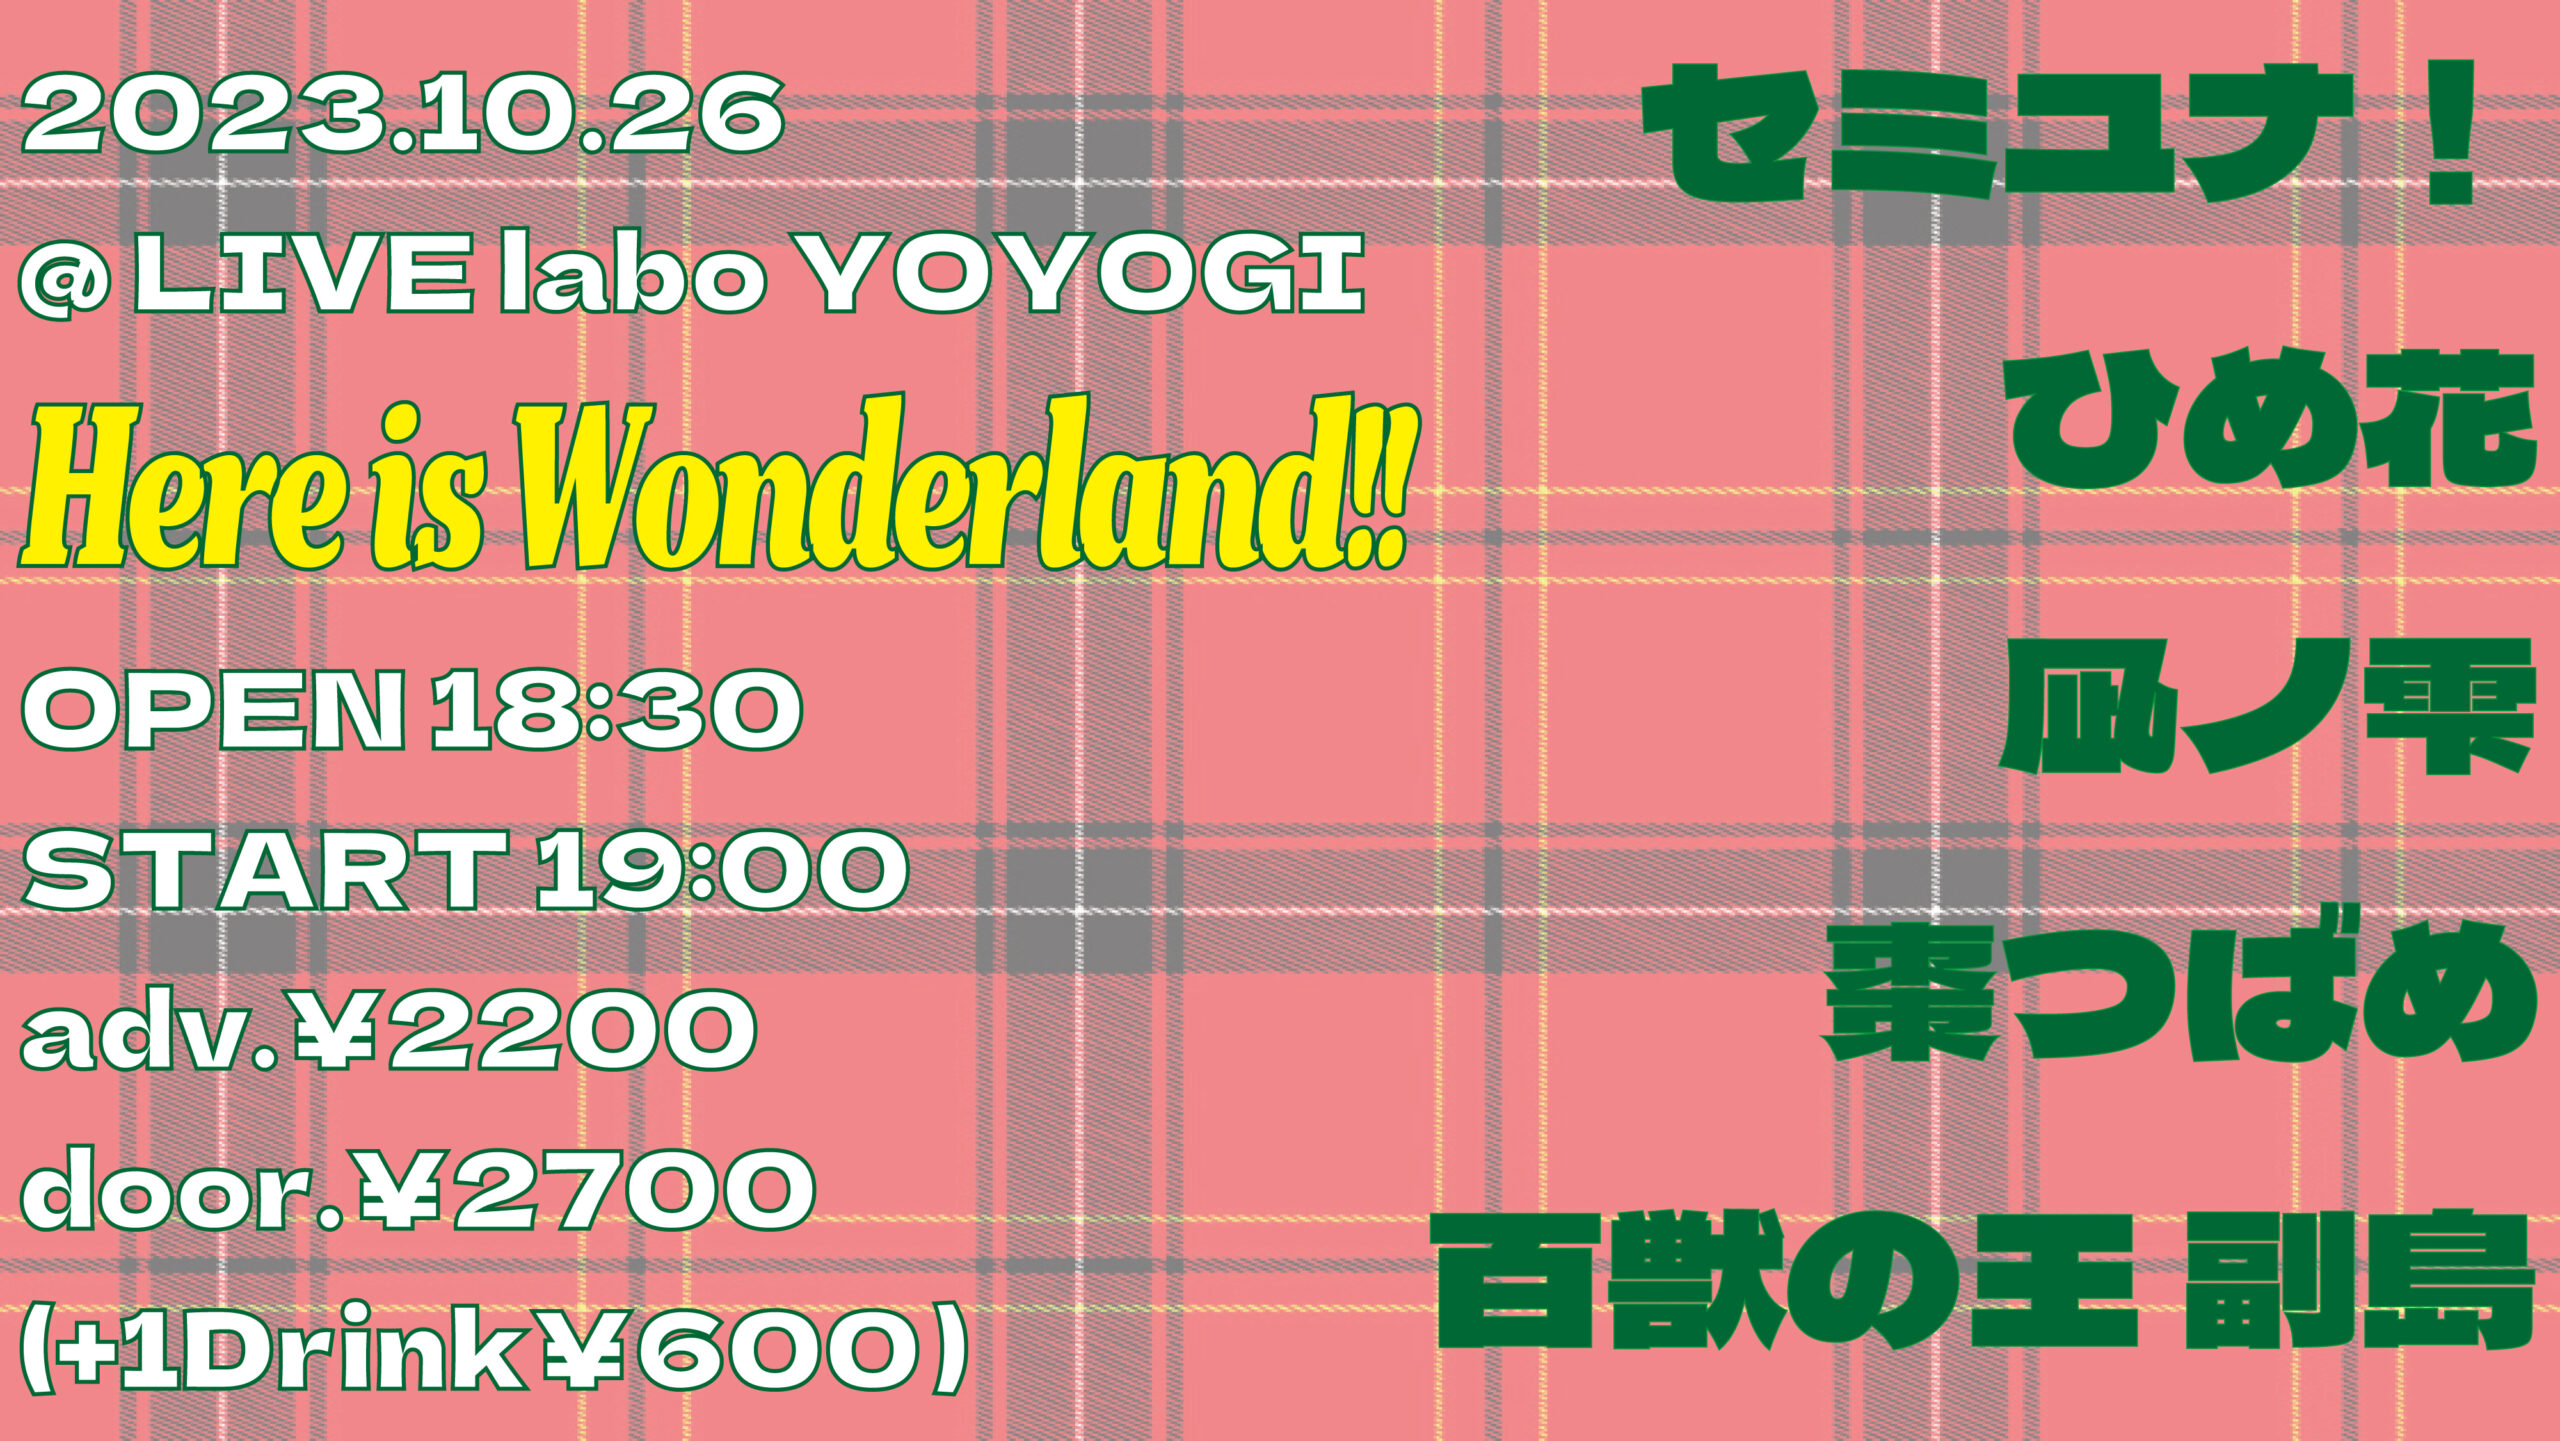 Here is Wonderland!!